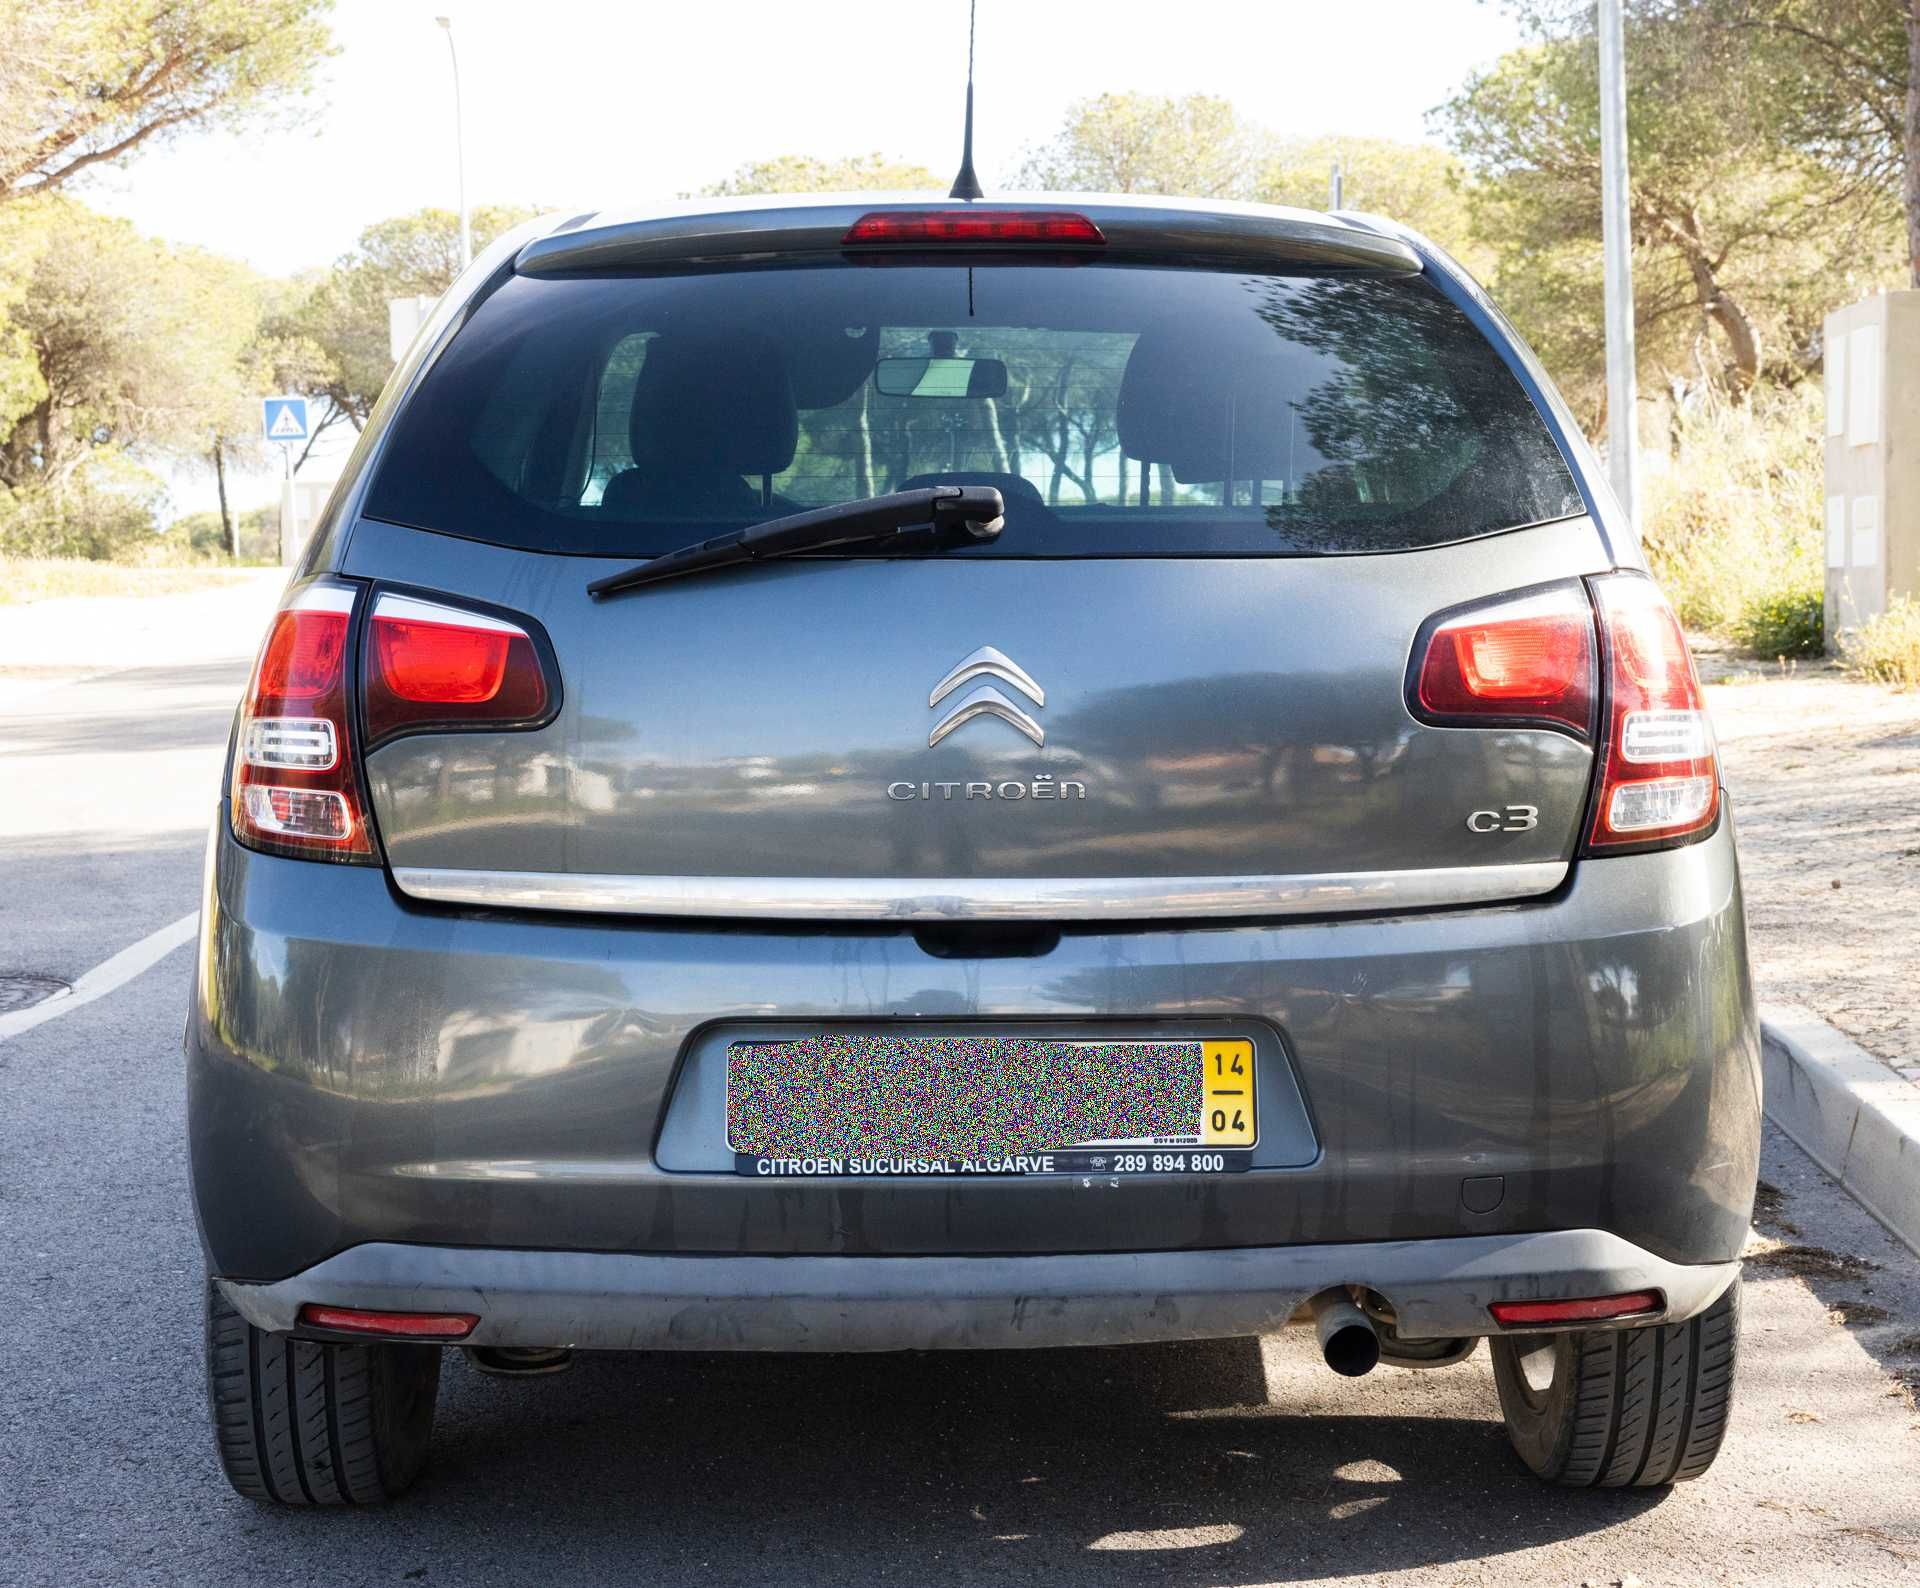 Citroën C3 2014 HDI 1.4